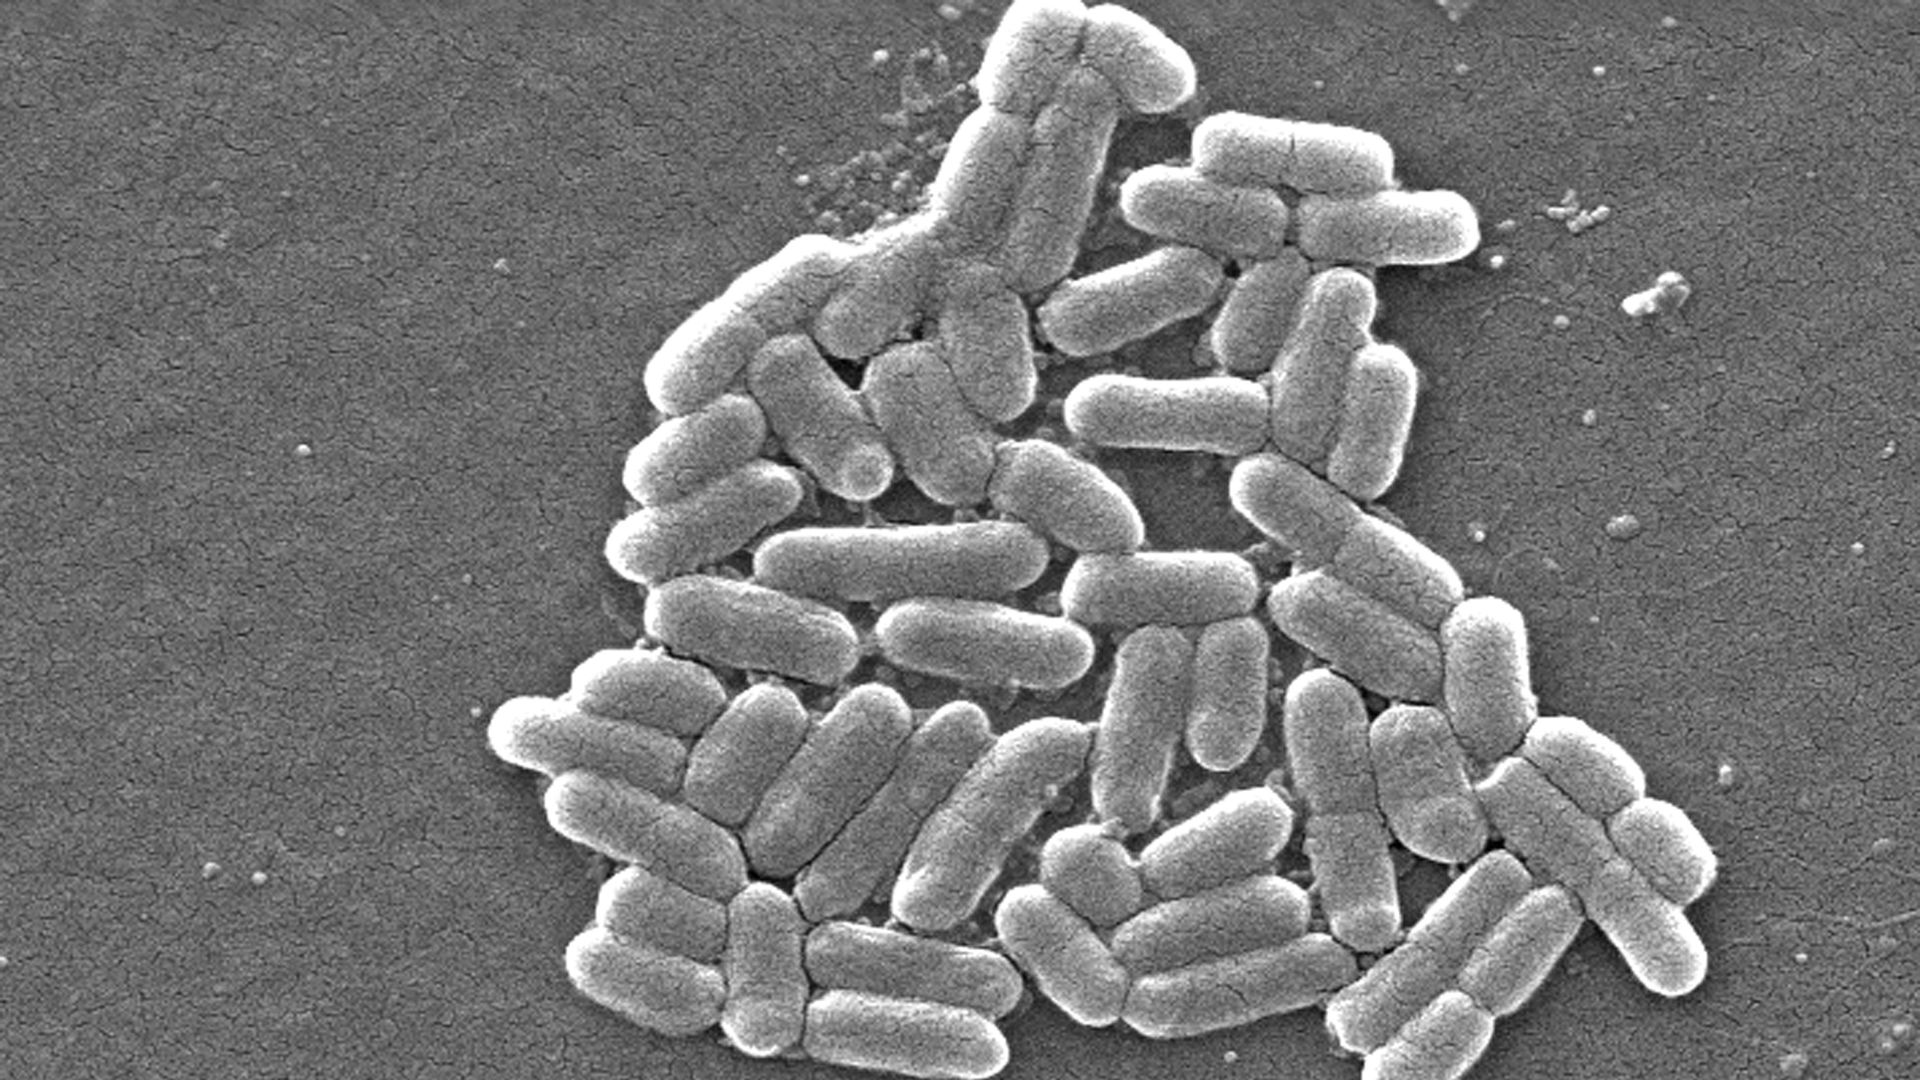 A photo of the bacteria shigella under a microscope